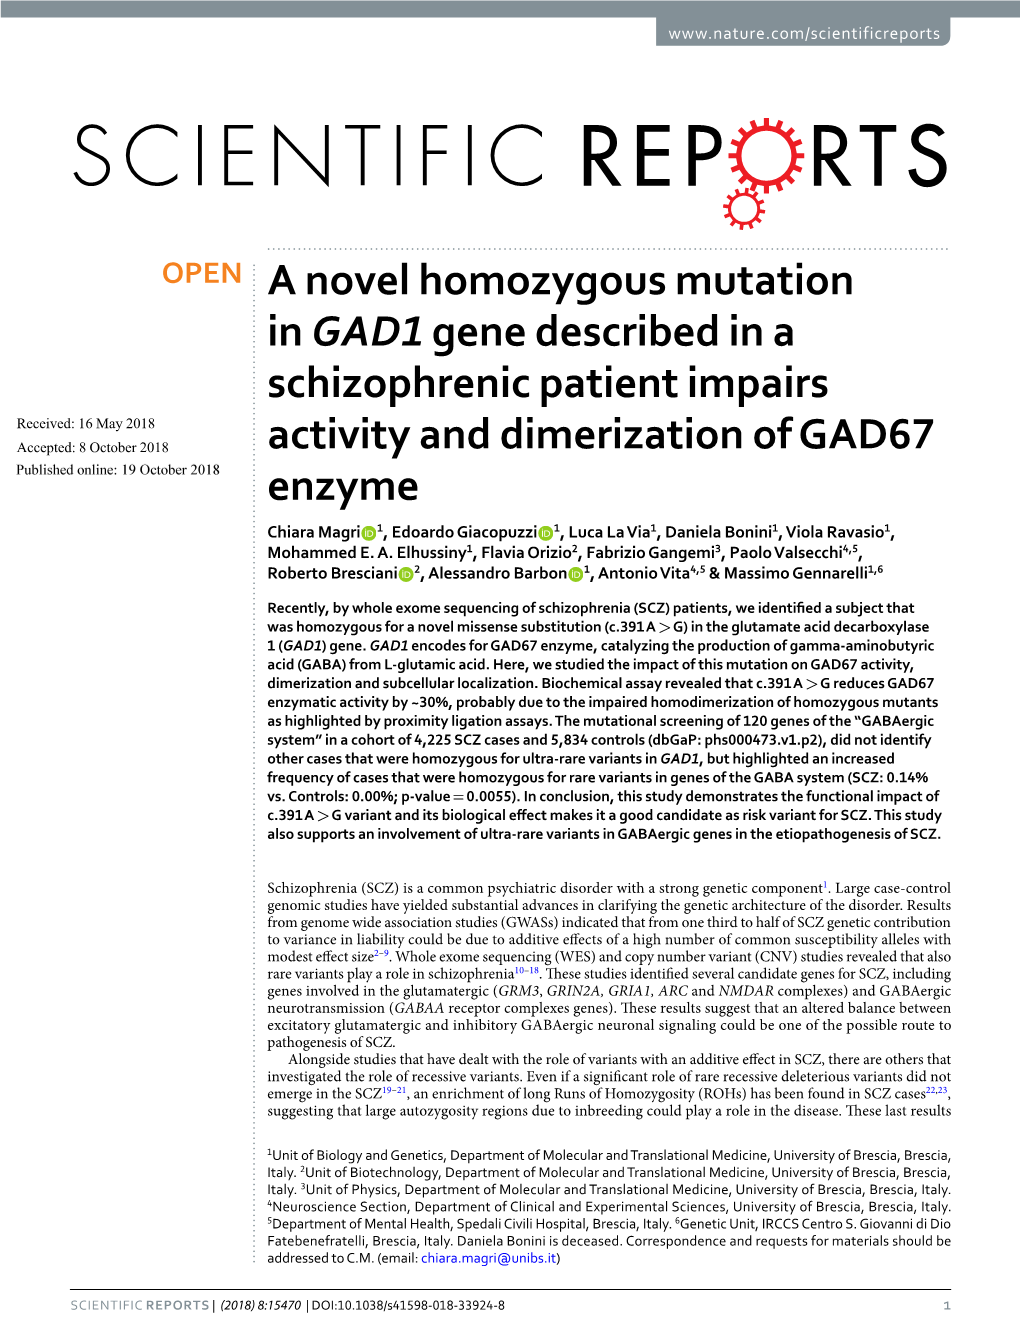 A Novel Homozygous Mutation in GAD1 Gene Described in A